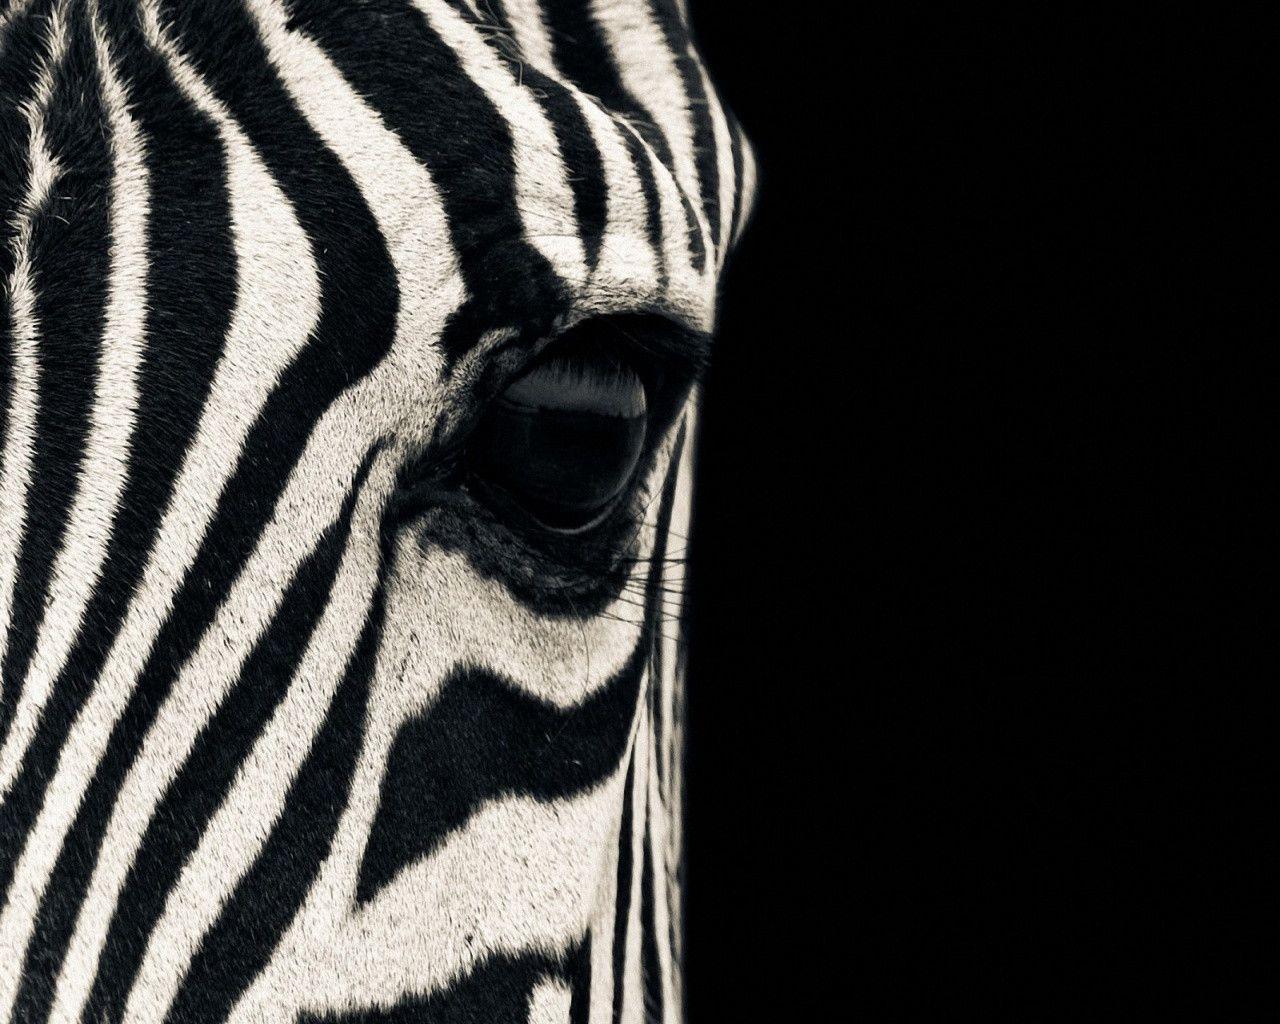 zebra backgrounds for desktop